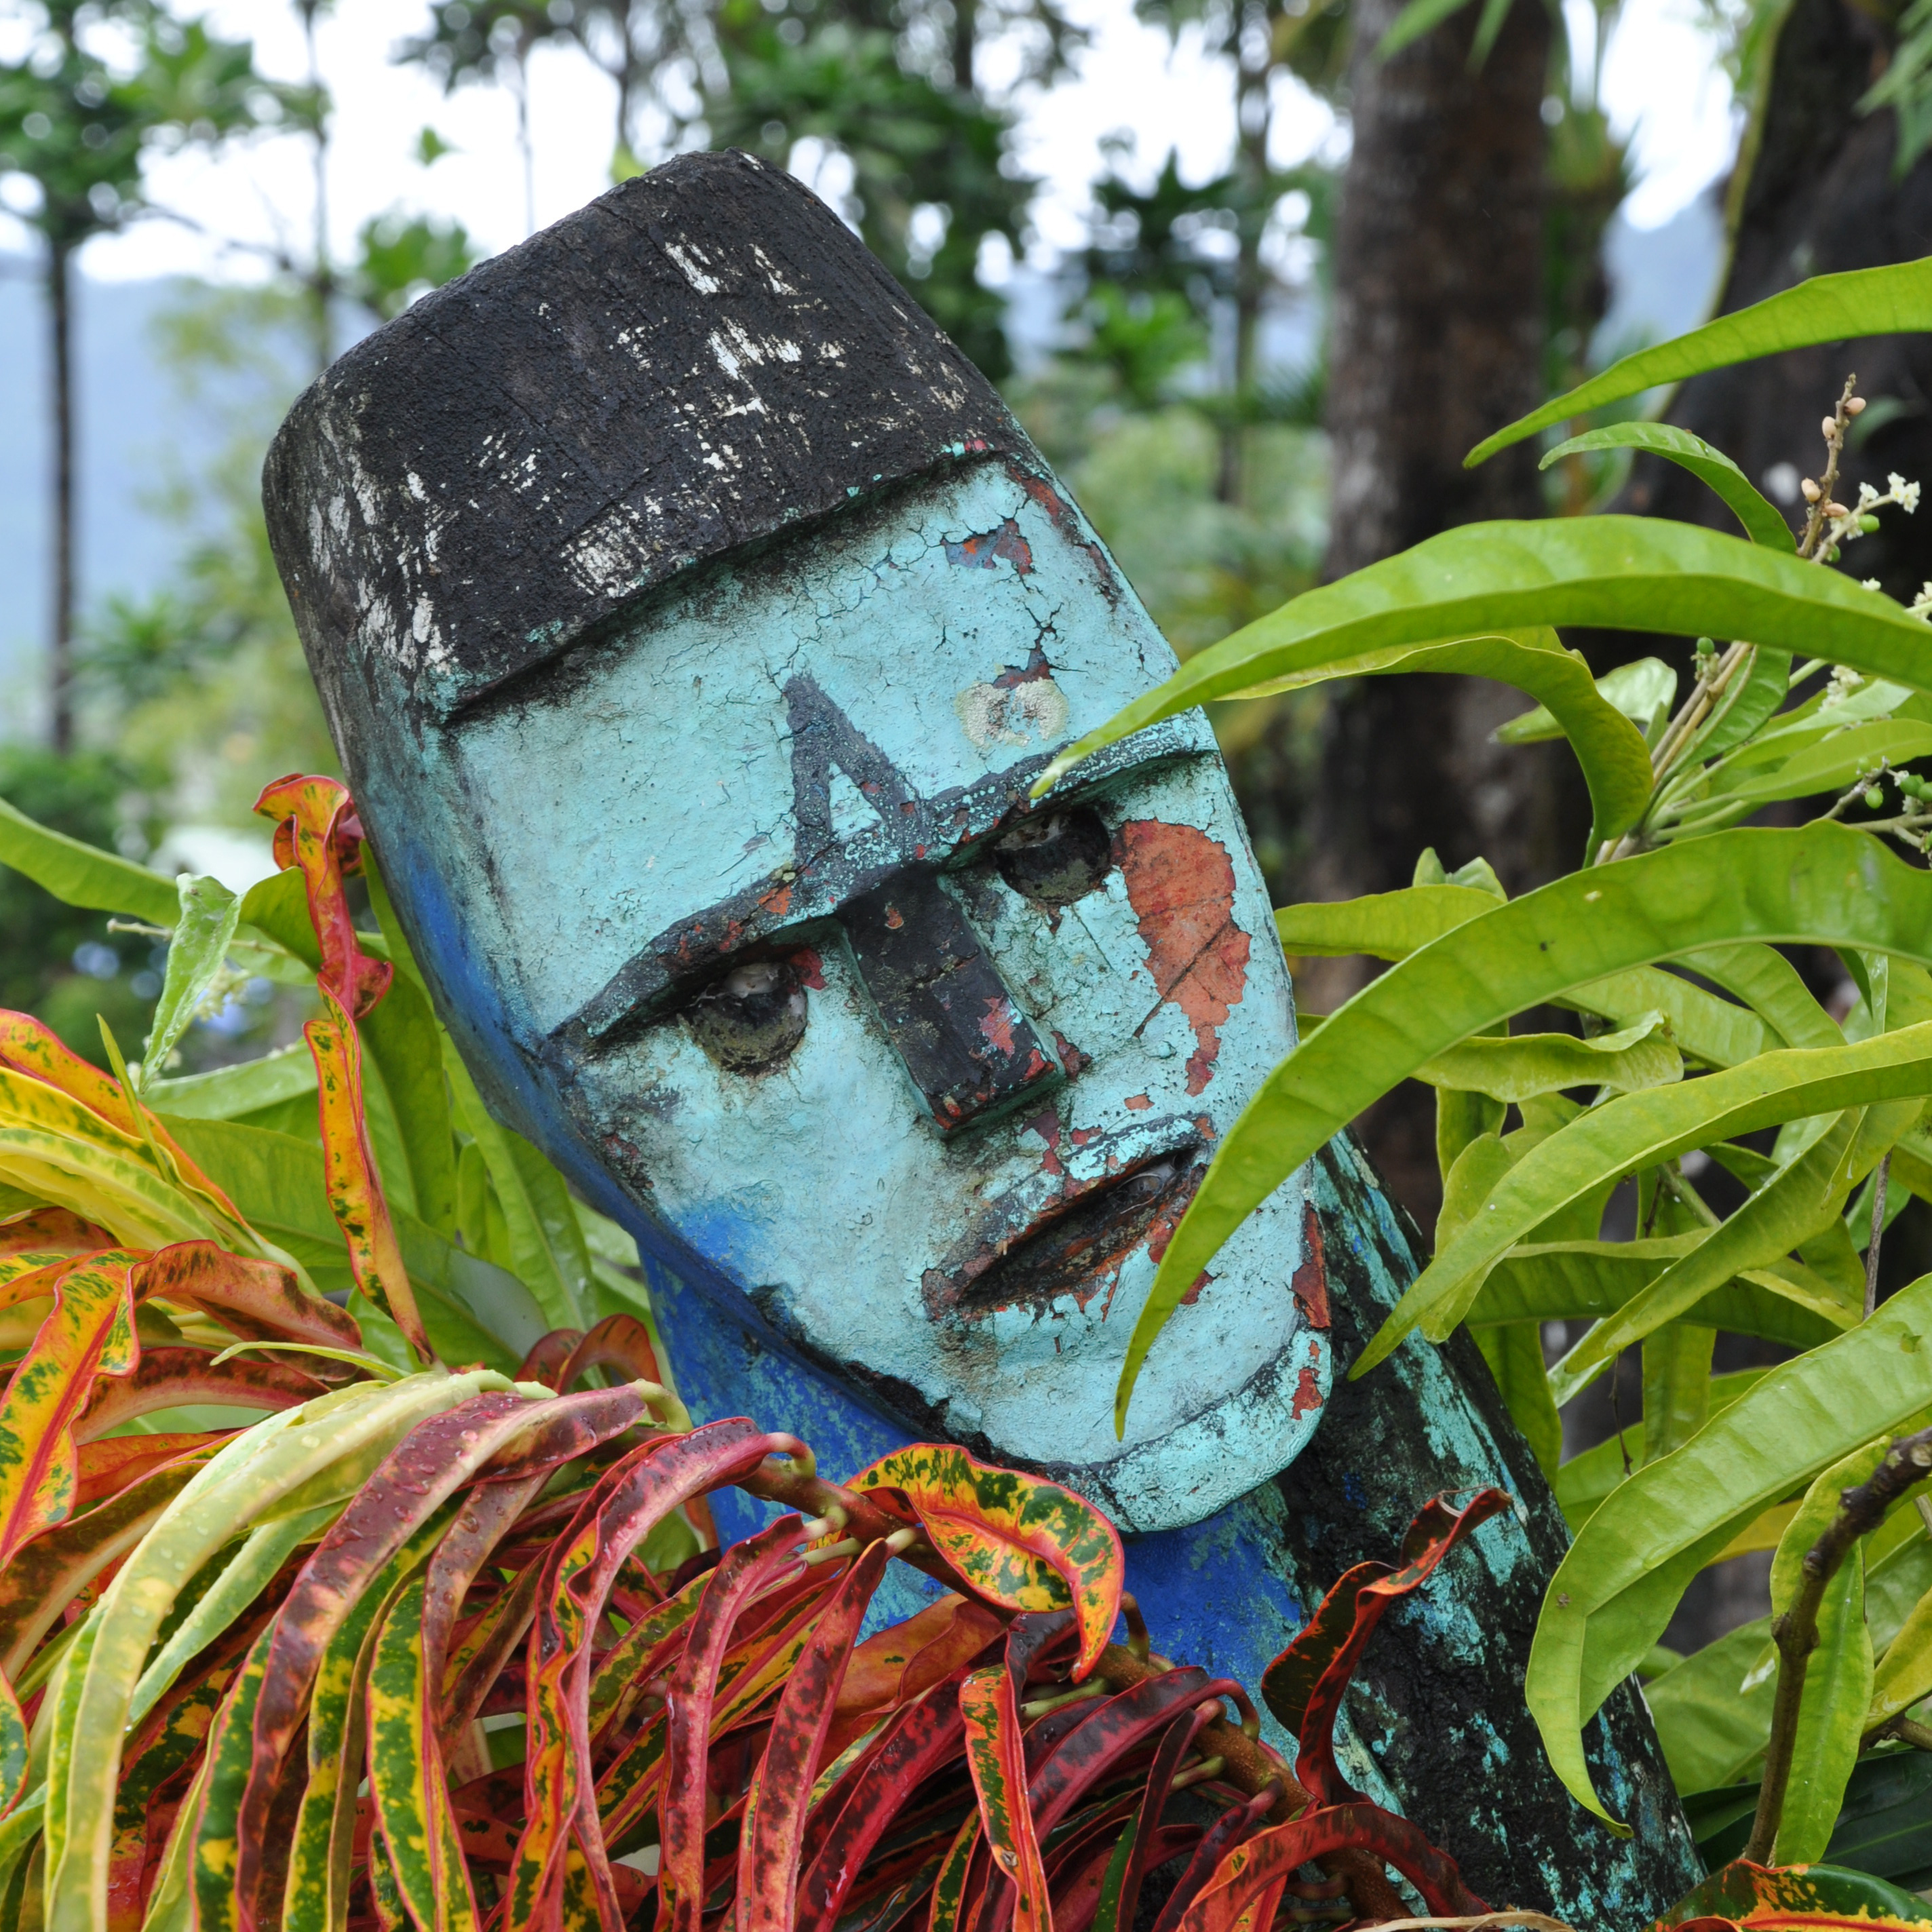 Cultural mask displayed among foliage 